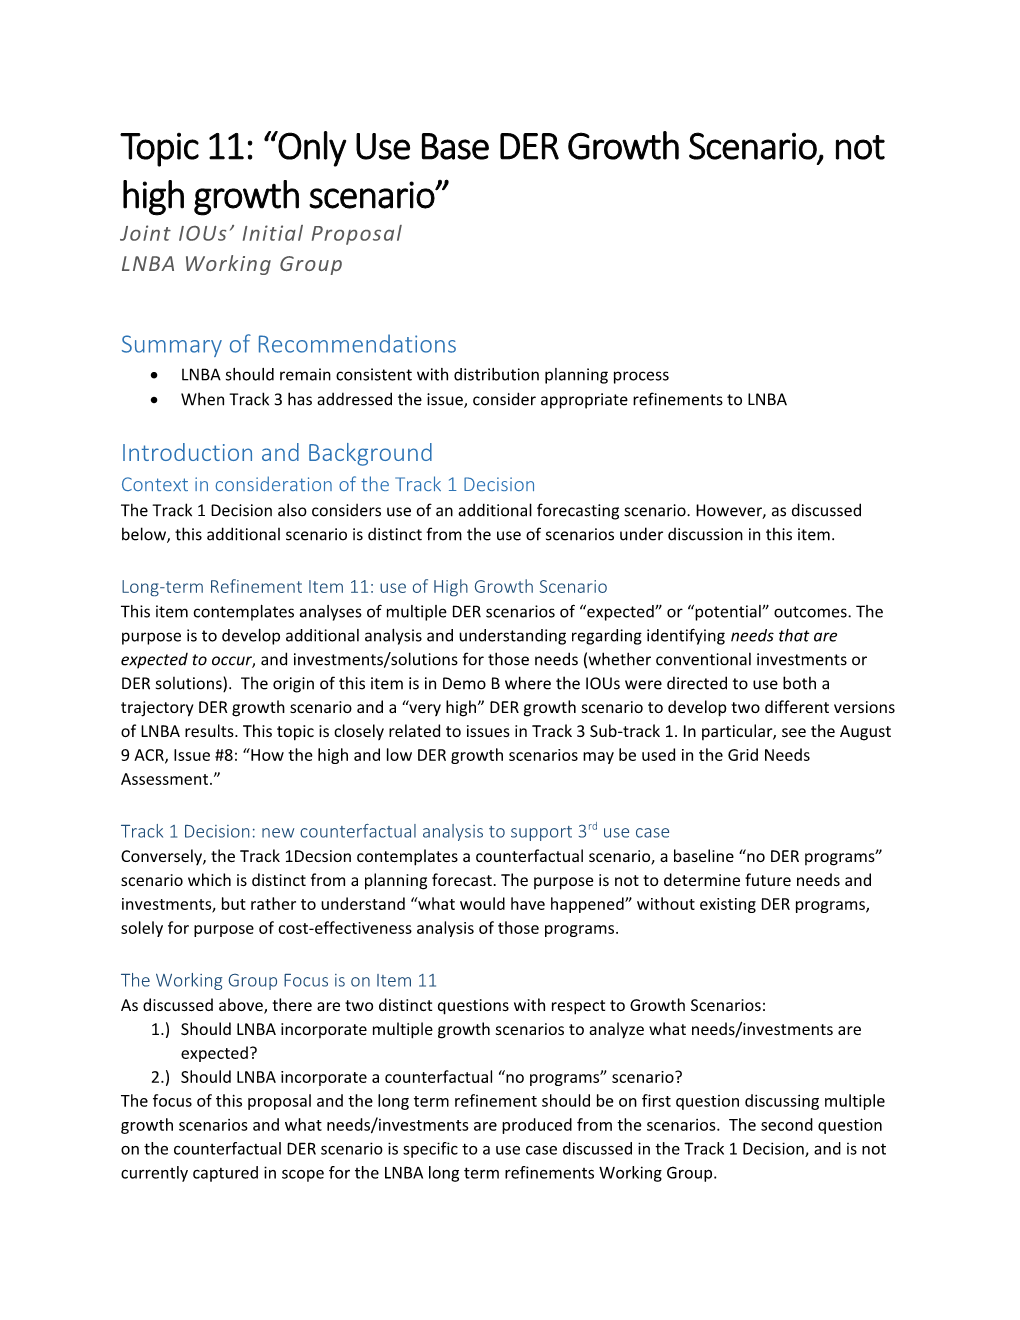 Topic 11: Only Use Base DER Growth Scenario, Not High Growth Scenario